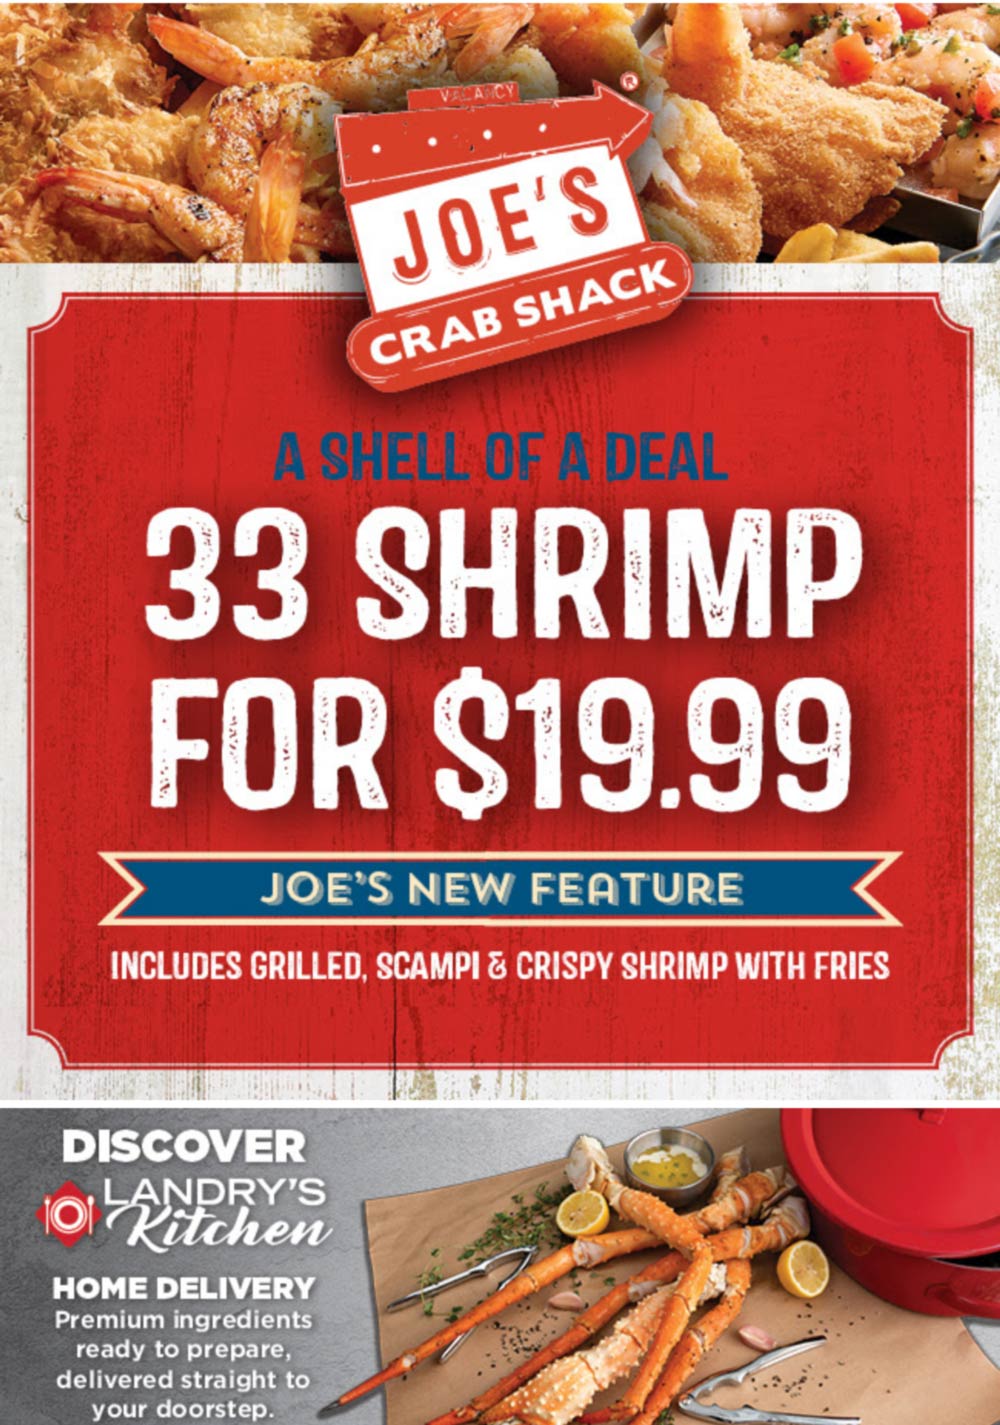 Joes Crab Shack restaurants Coupon  33 shrimp + fries = $20 at Joes Crab Shack restaurants #joescrabshack 